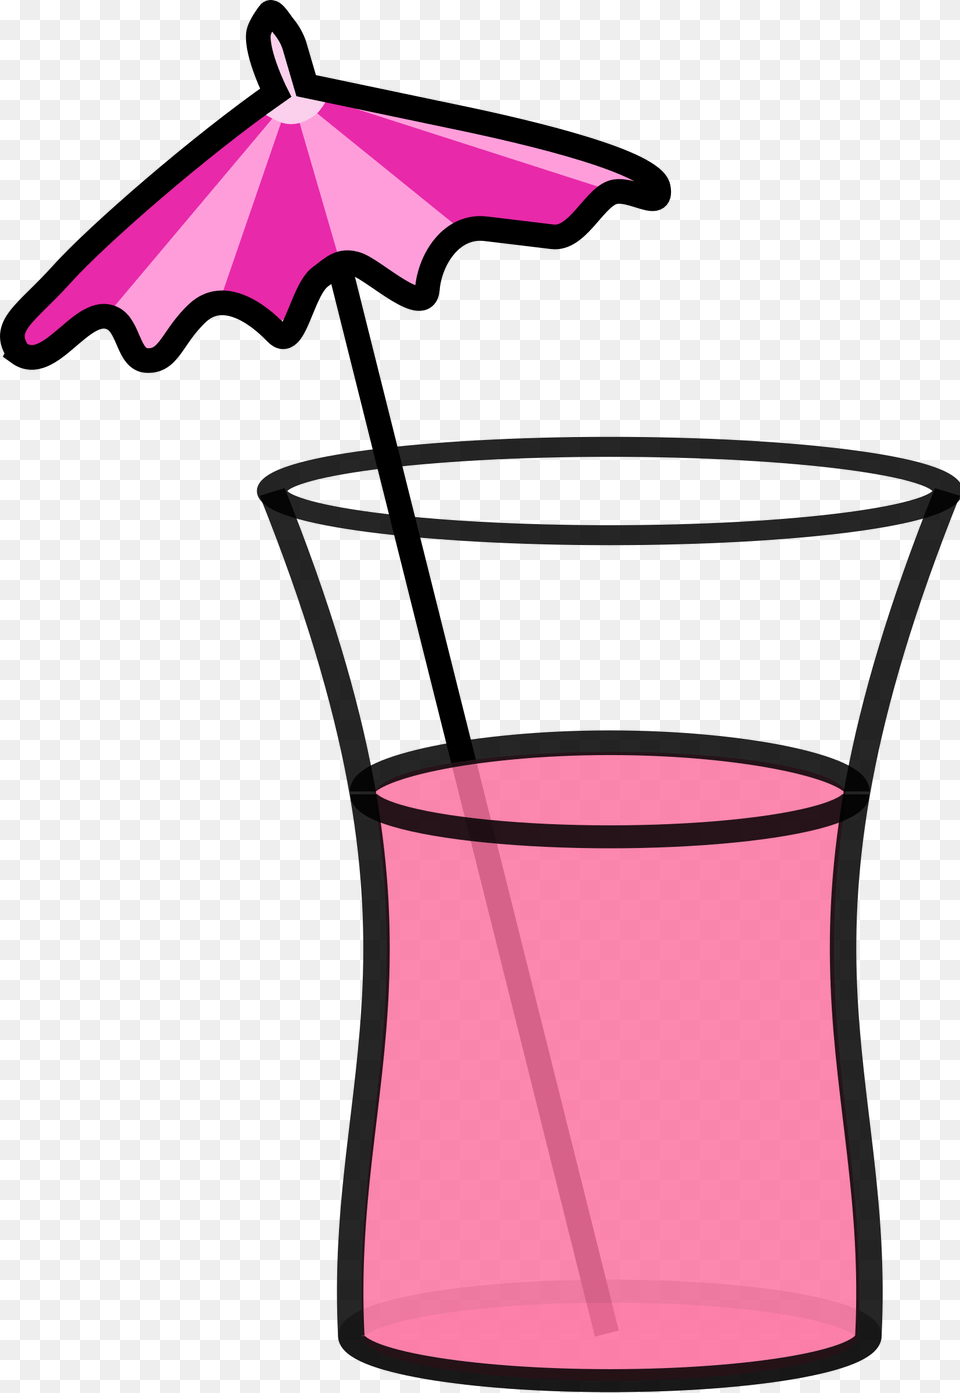 Drink Umbrella Clipart Download Umbrella Drink Pink Drink Clipart, Canopy Png Image